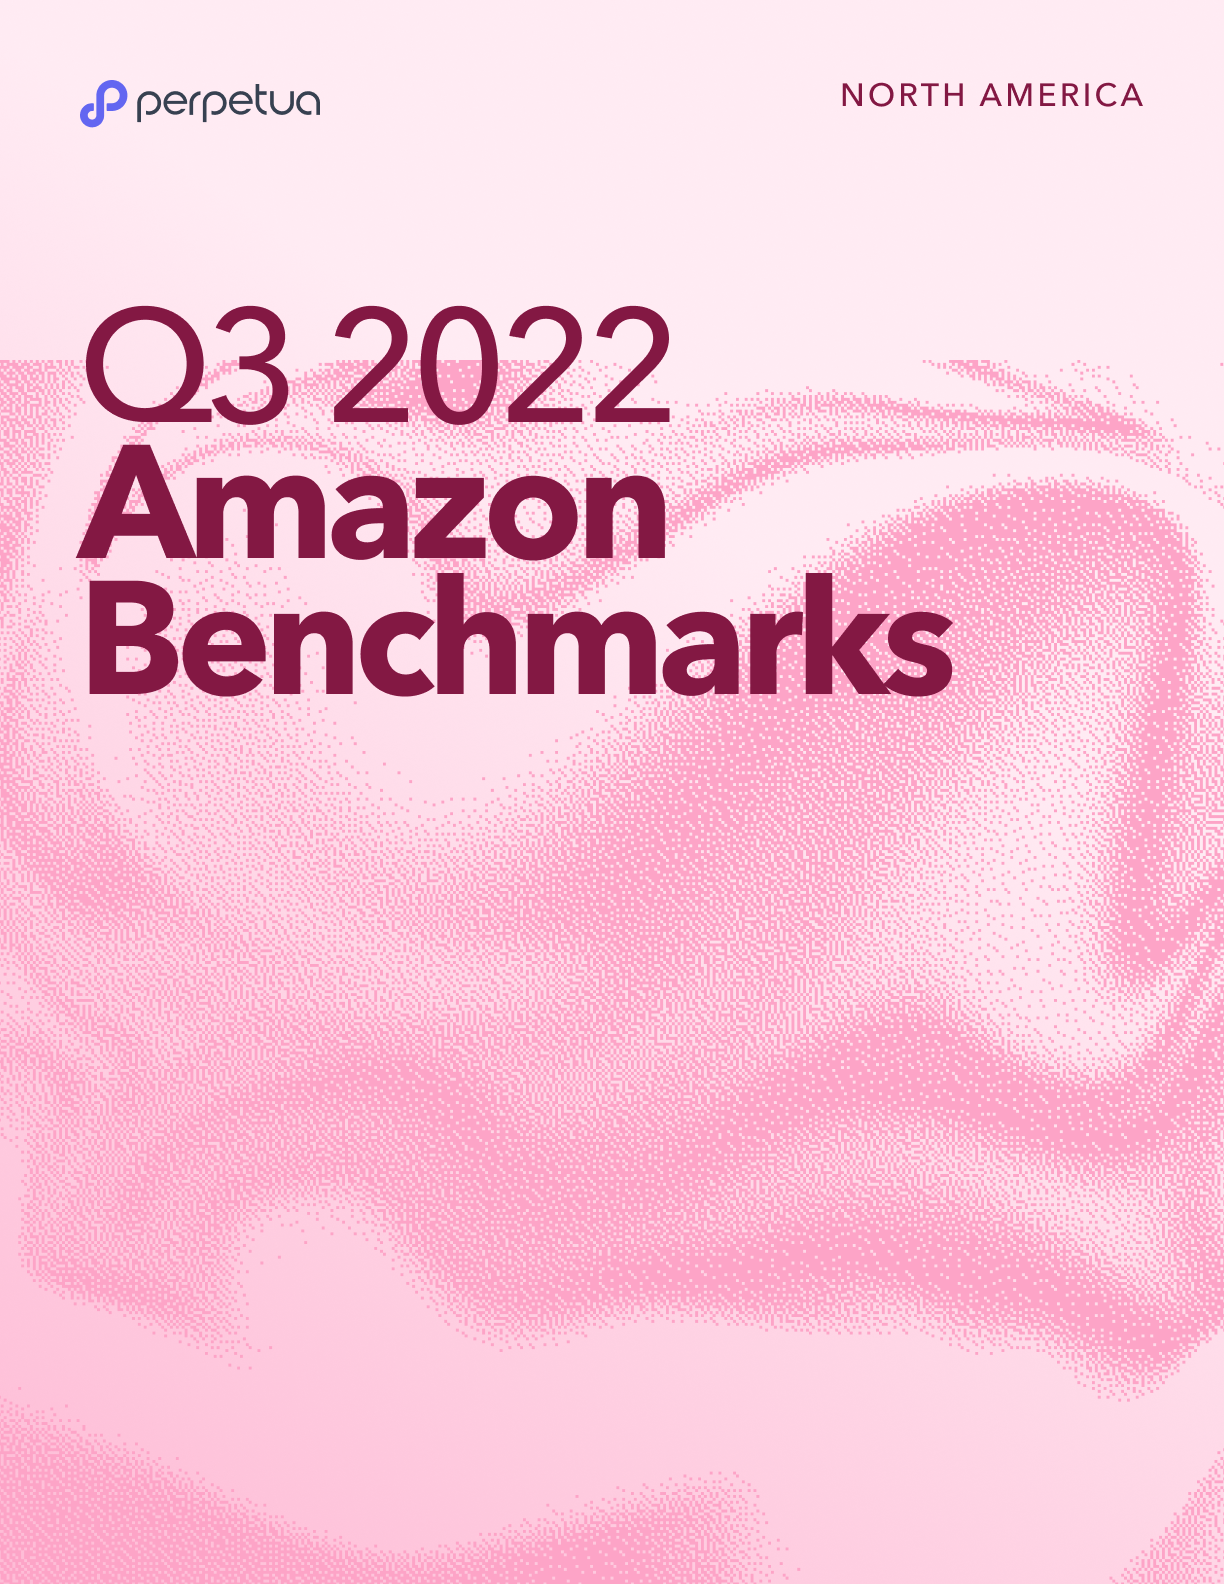 Q3 2022 Amazon Benchmark Report - North America